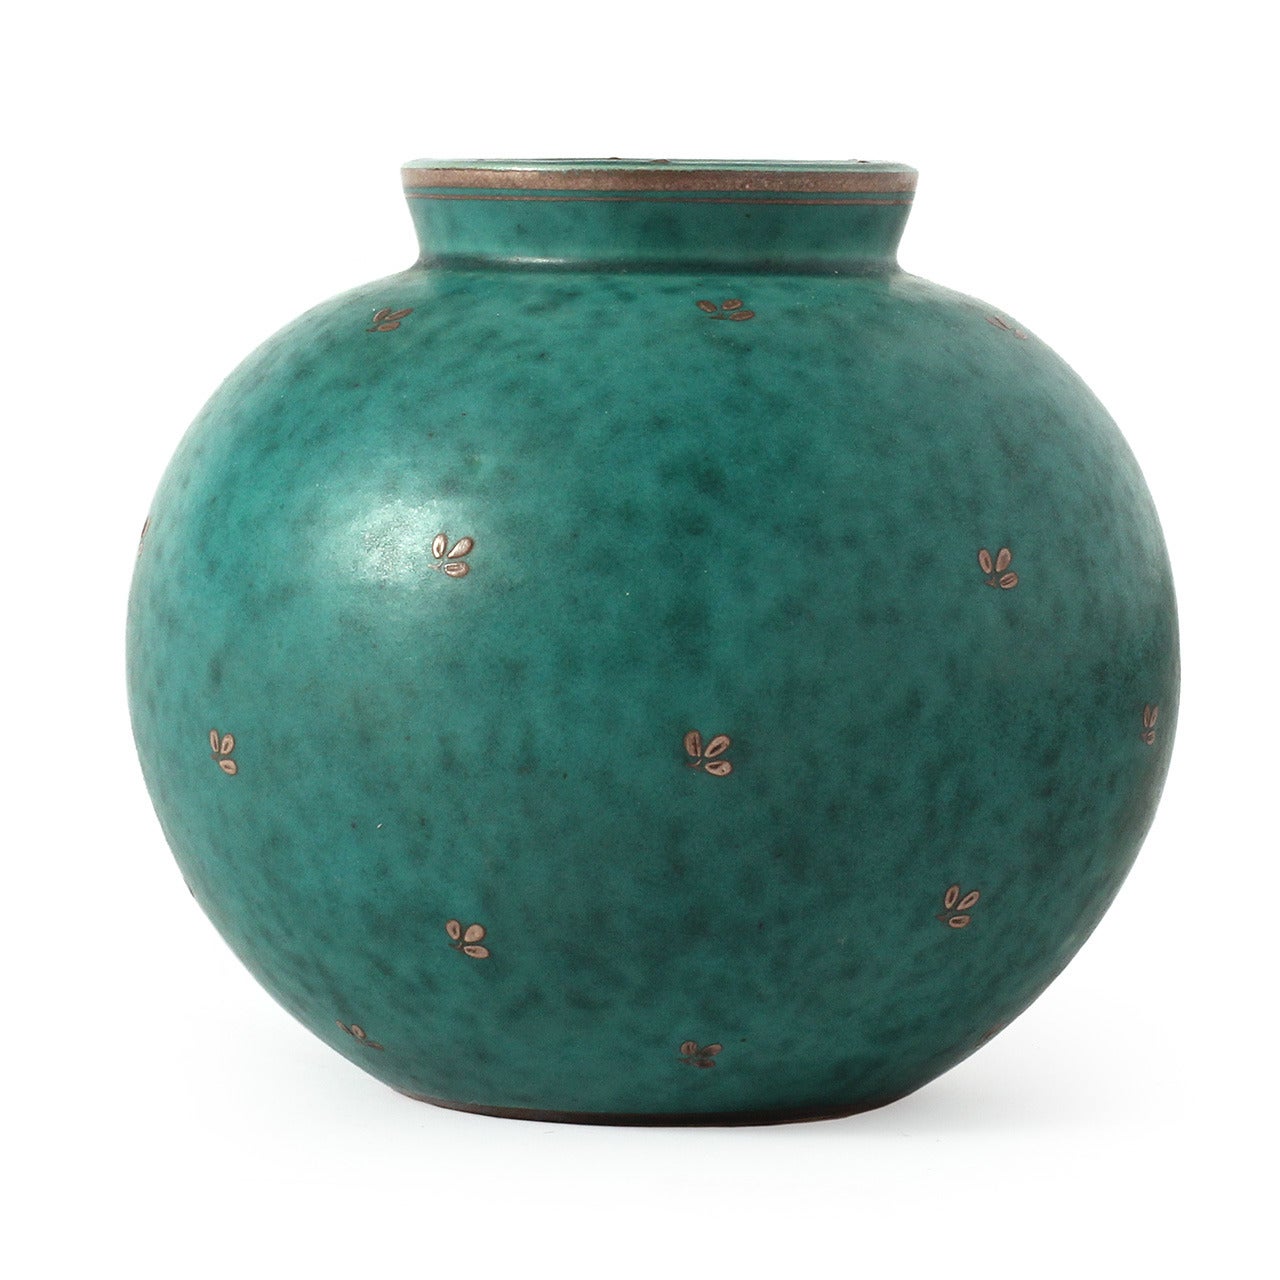 Argenta Vase by Wilhelm Kage